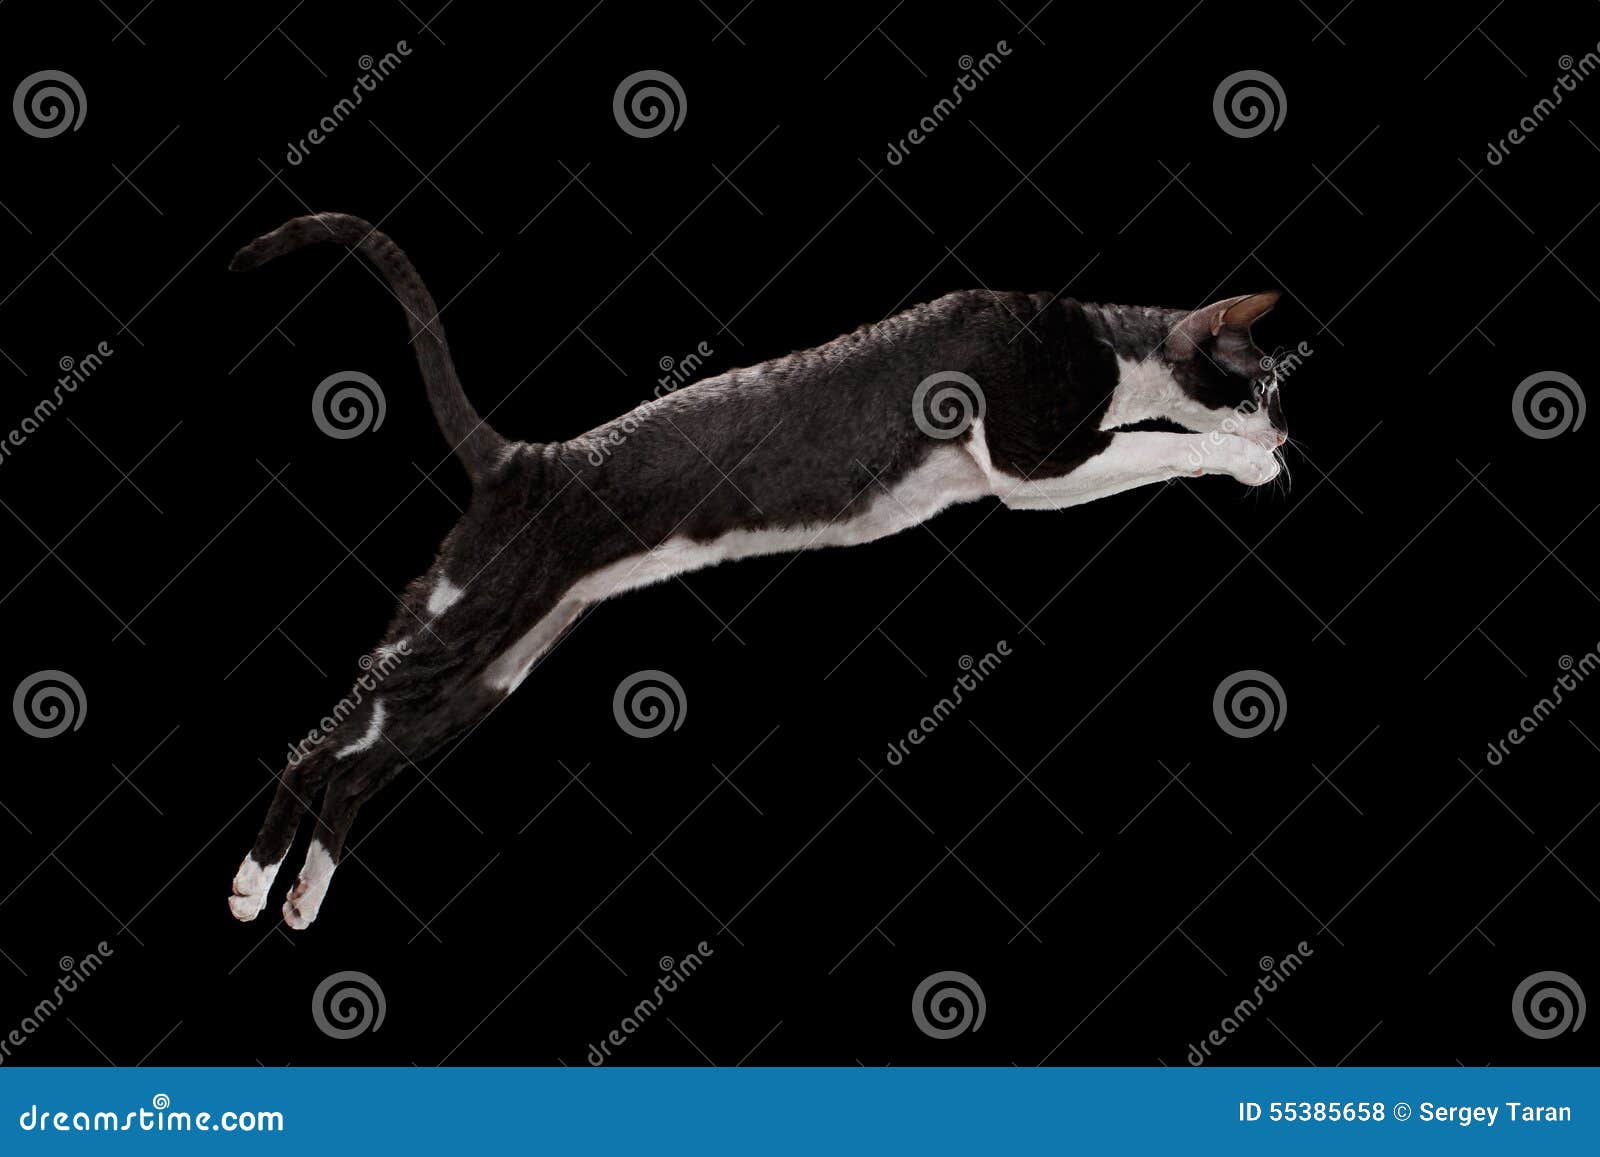 jumping cornish rex cat  on black